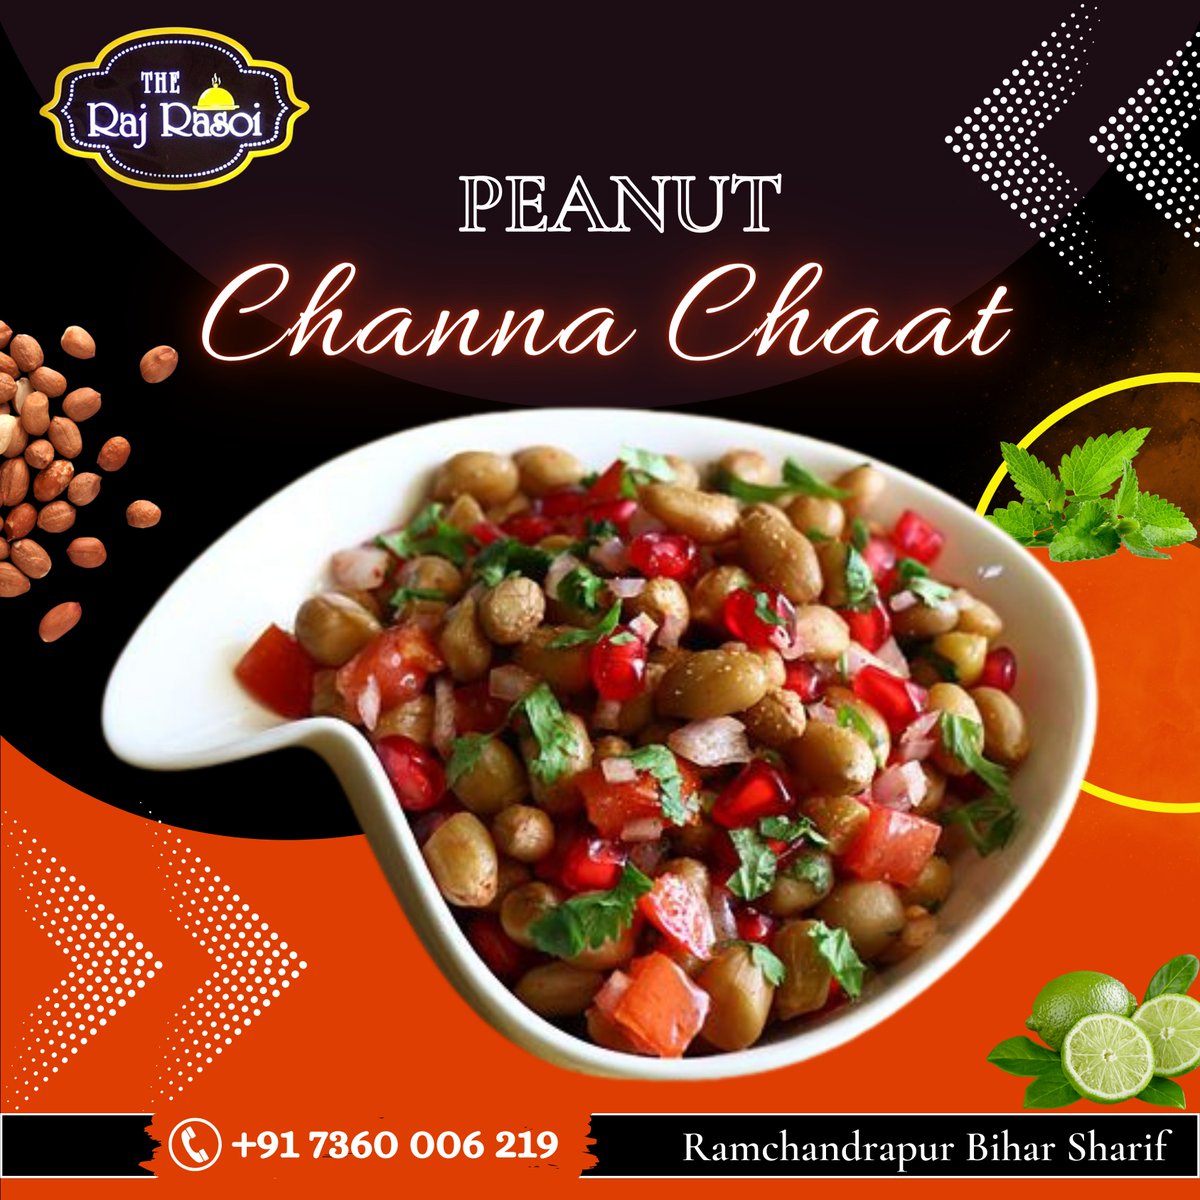 🥜Relish the Crunchy Goodness of Peanut Chana Chaat! 🥜
#therajrasoi #restaurantsinbiharsharif #restaurant #PeanutChanaChaat #ChaatLovers #FoodieGram #FlavorfulBites #TasteTheGoodness #FoodHeaven #SnackTime #FoodExperience